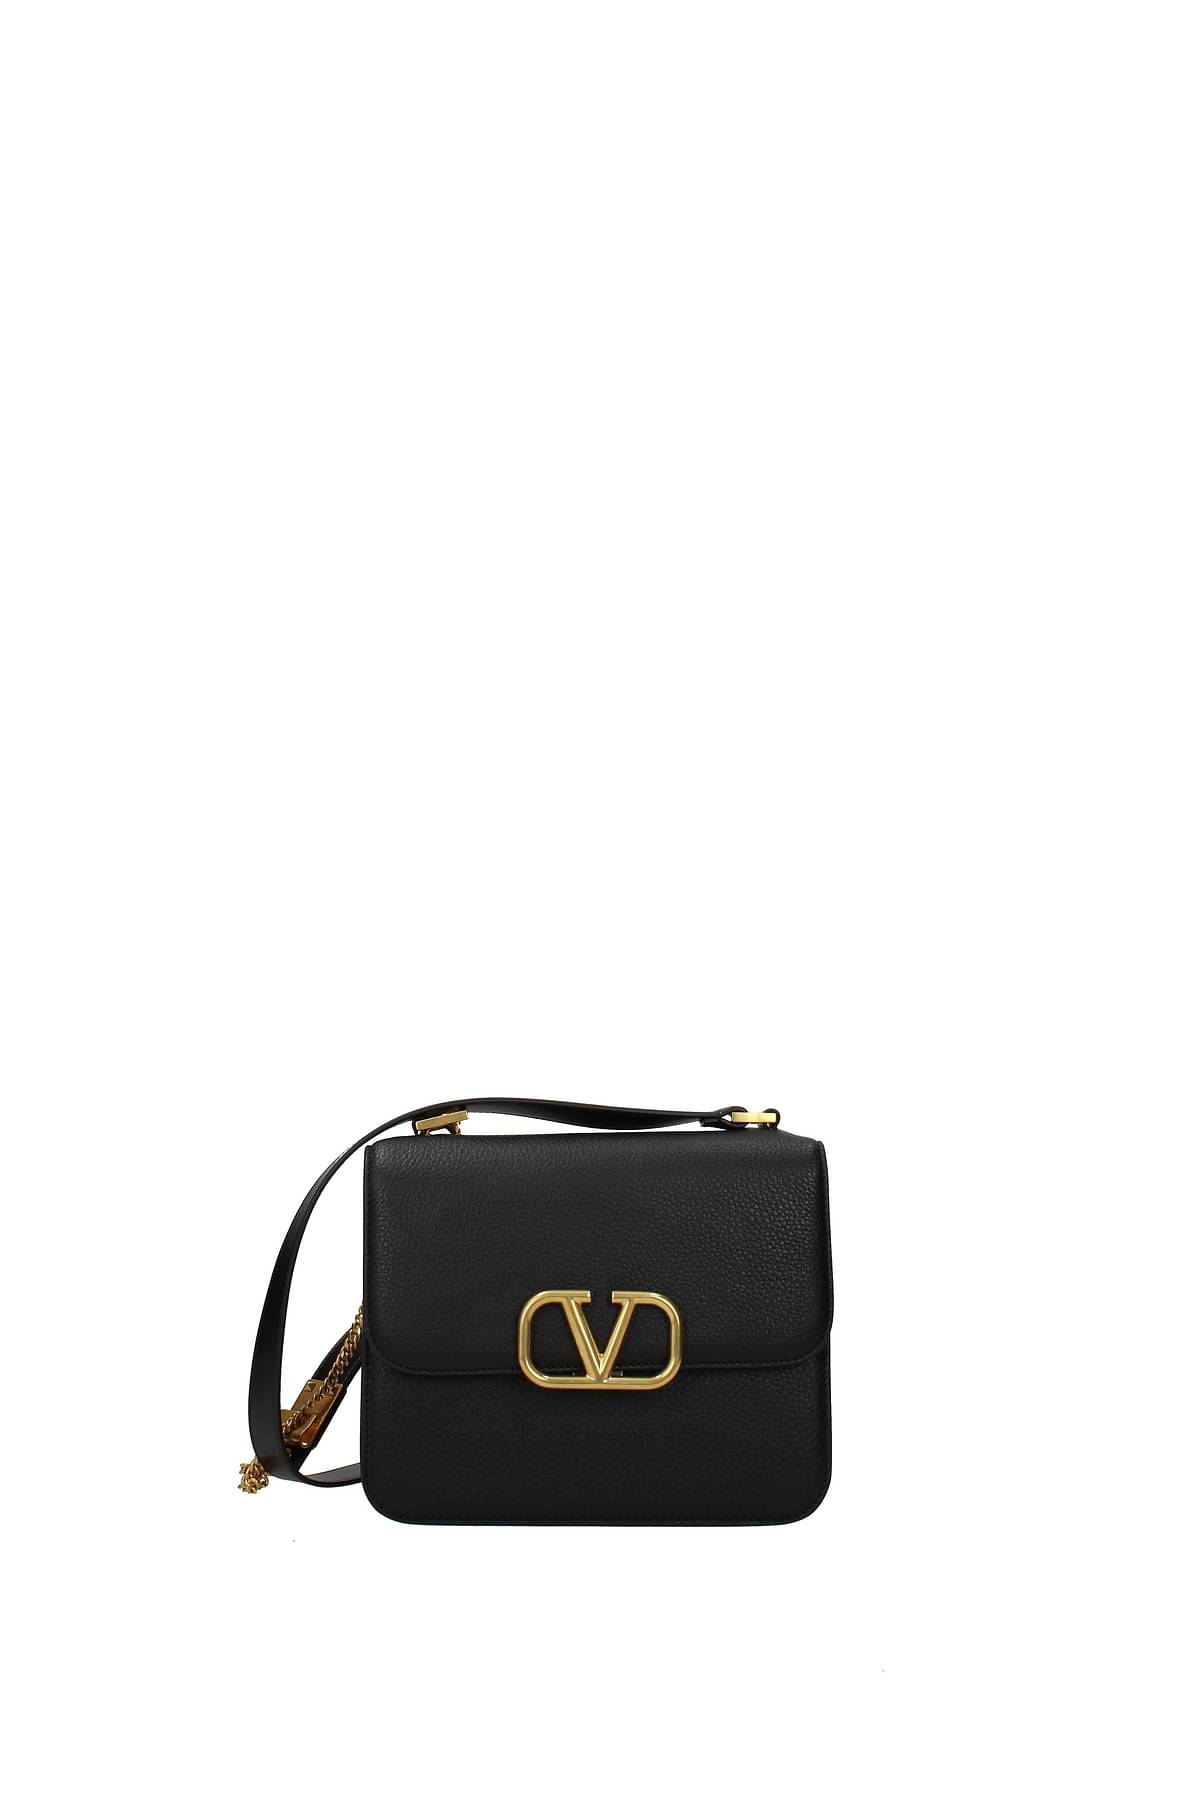 Valentino Garavani - Crossbody bag for Woman - Black - 3W2B0M59IAI